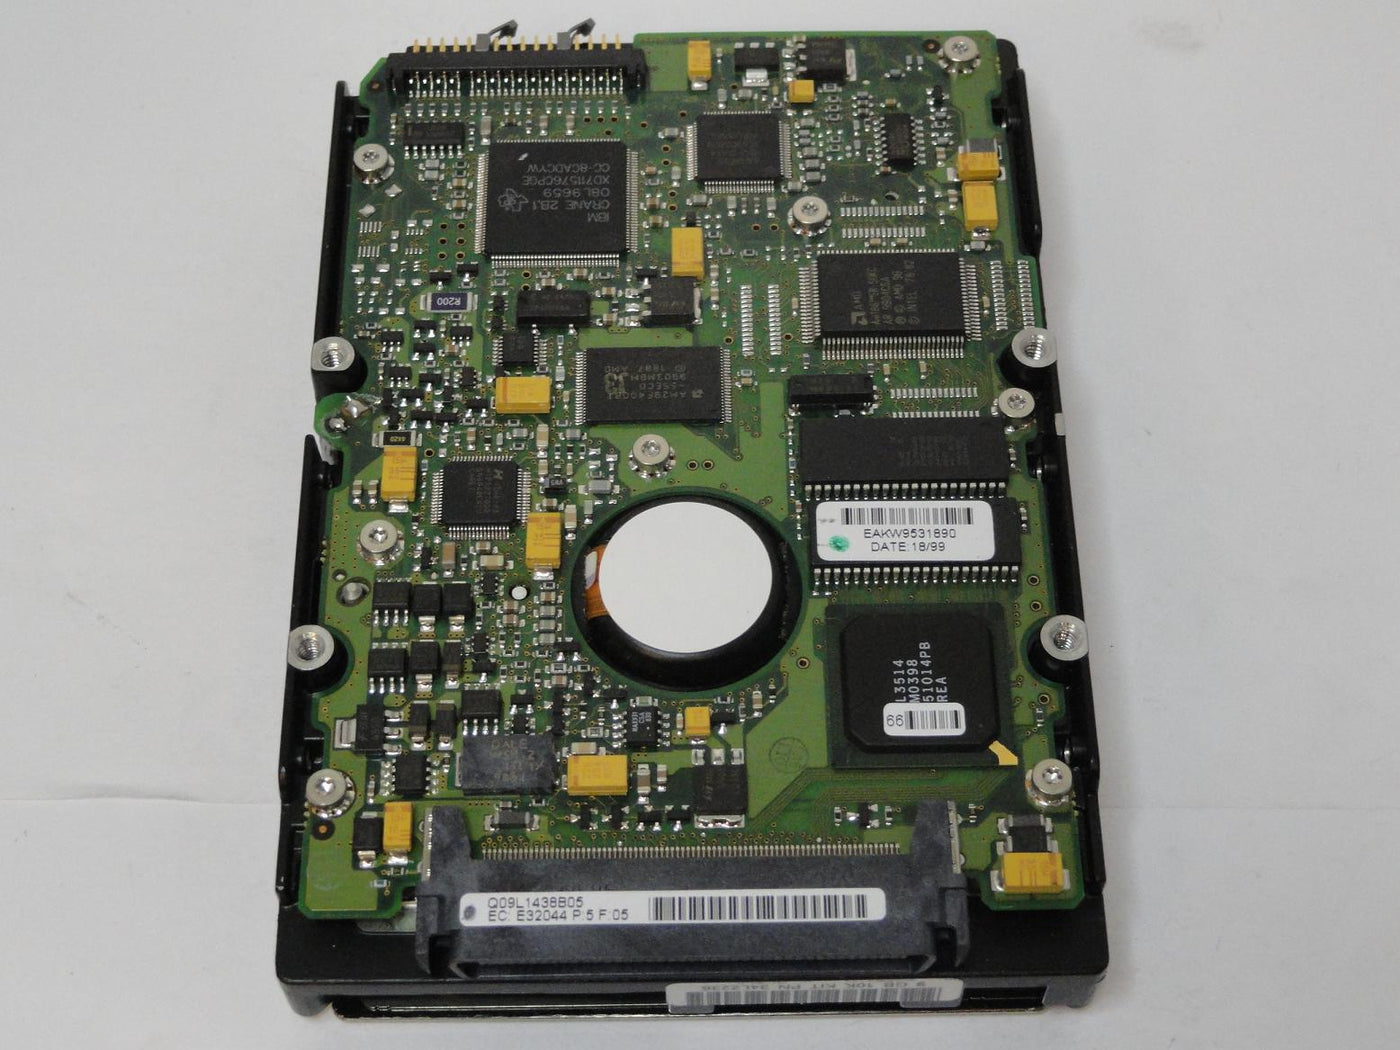 MC3692_09L1503_9.1GB 80P SCSI SCA HDD - Image2